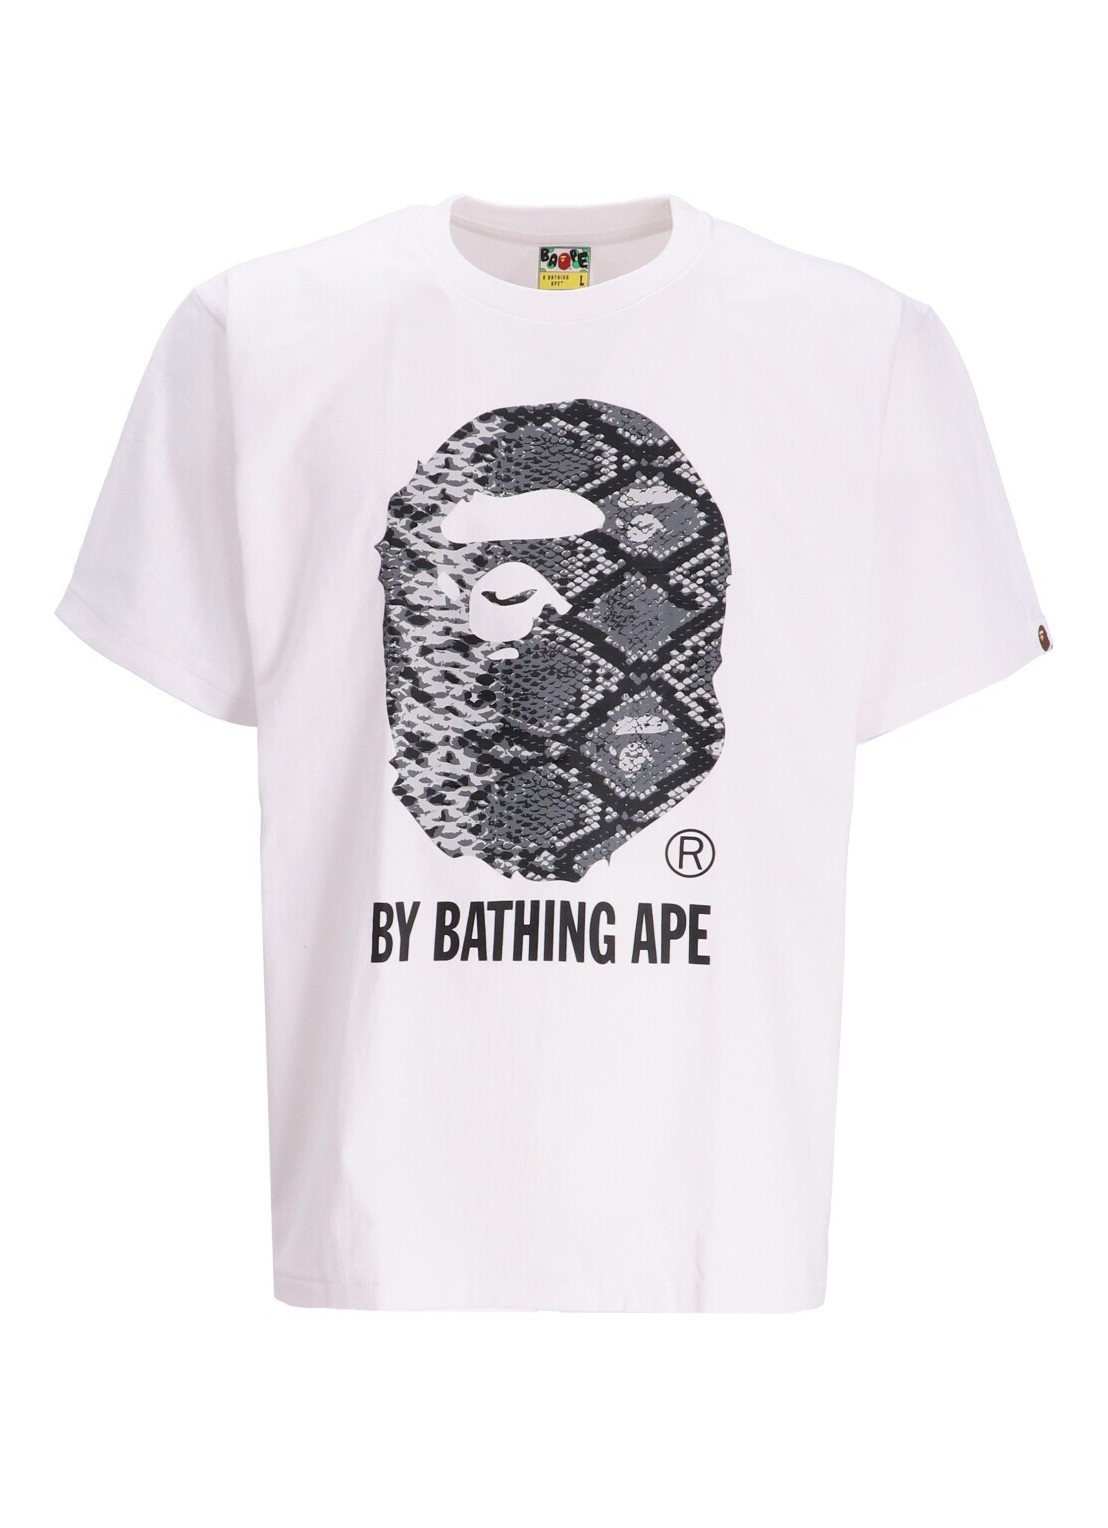 Camiseta bape t-shirt man bape snake by bathing ape tee m c 001tei801036m whxgy talla 3XL
 